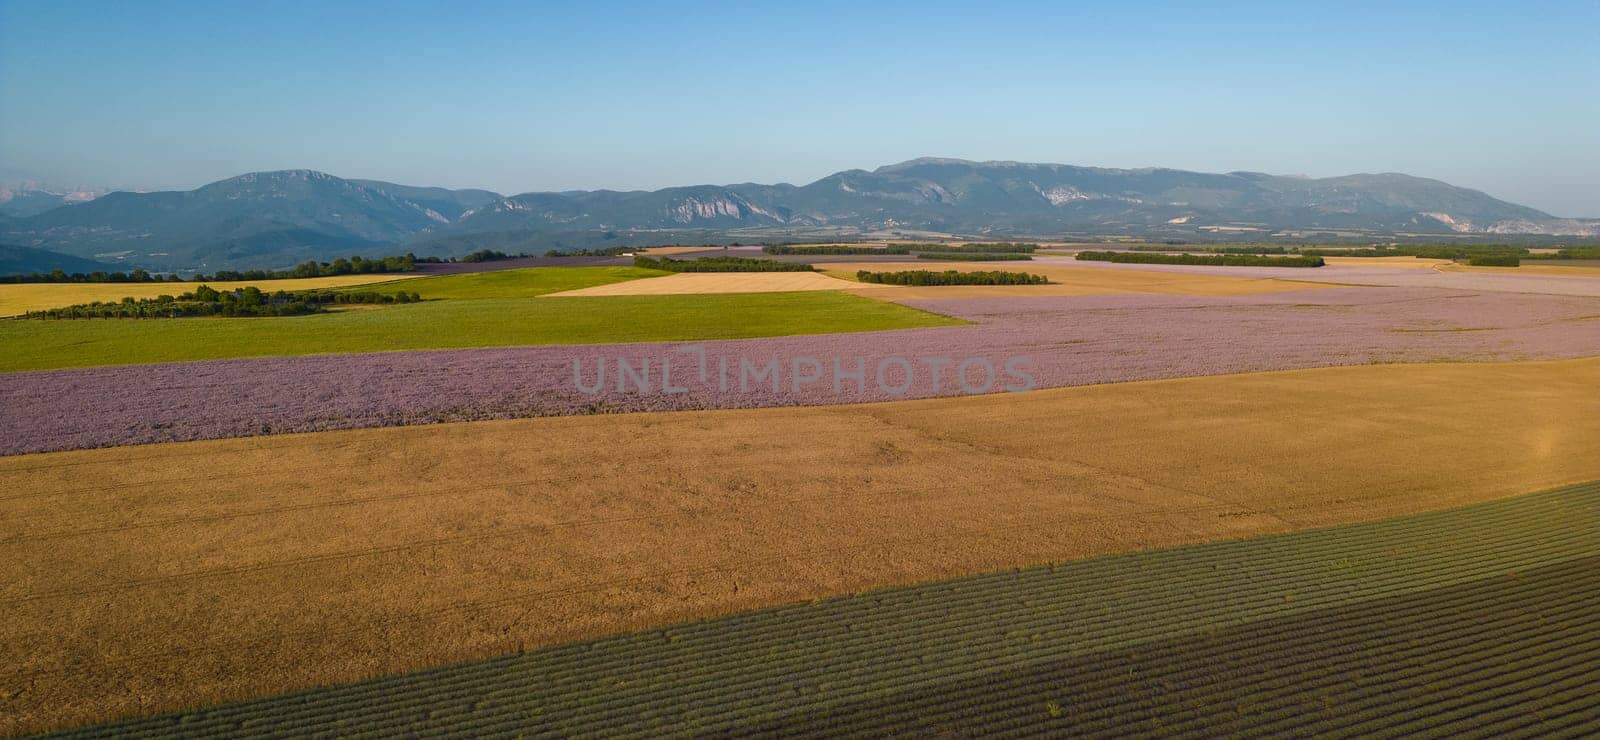 Plateau de Valensole lavender field at sunset in Haute Alpes Provence Cote d'Azur, High quality 4k footage